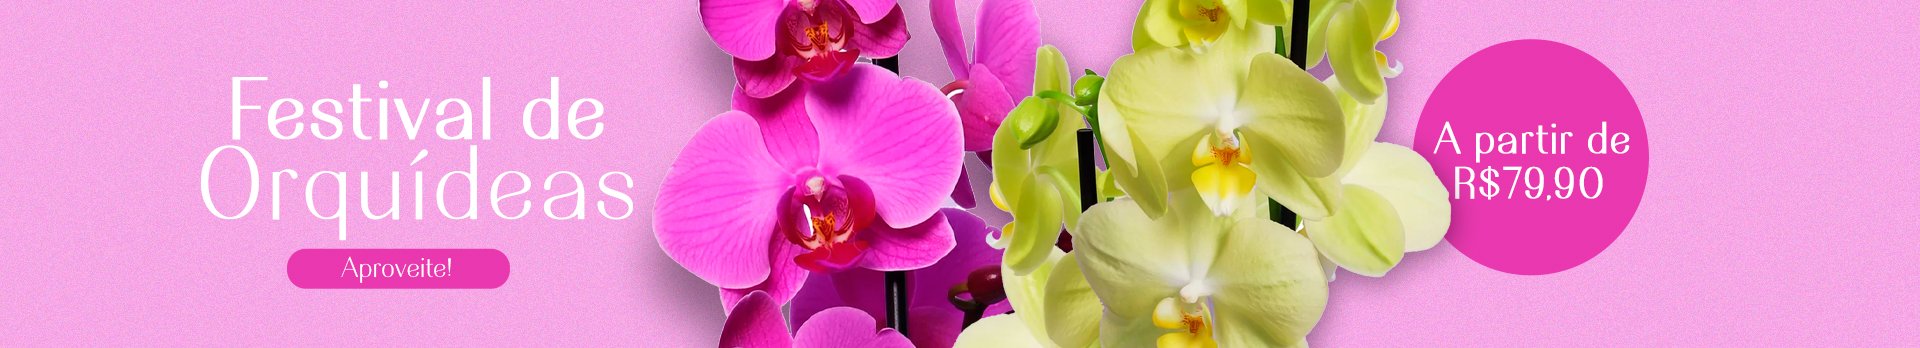 Promo Orquídeas a partir de 79,90 - Super